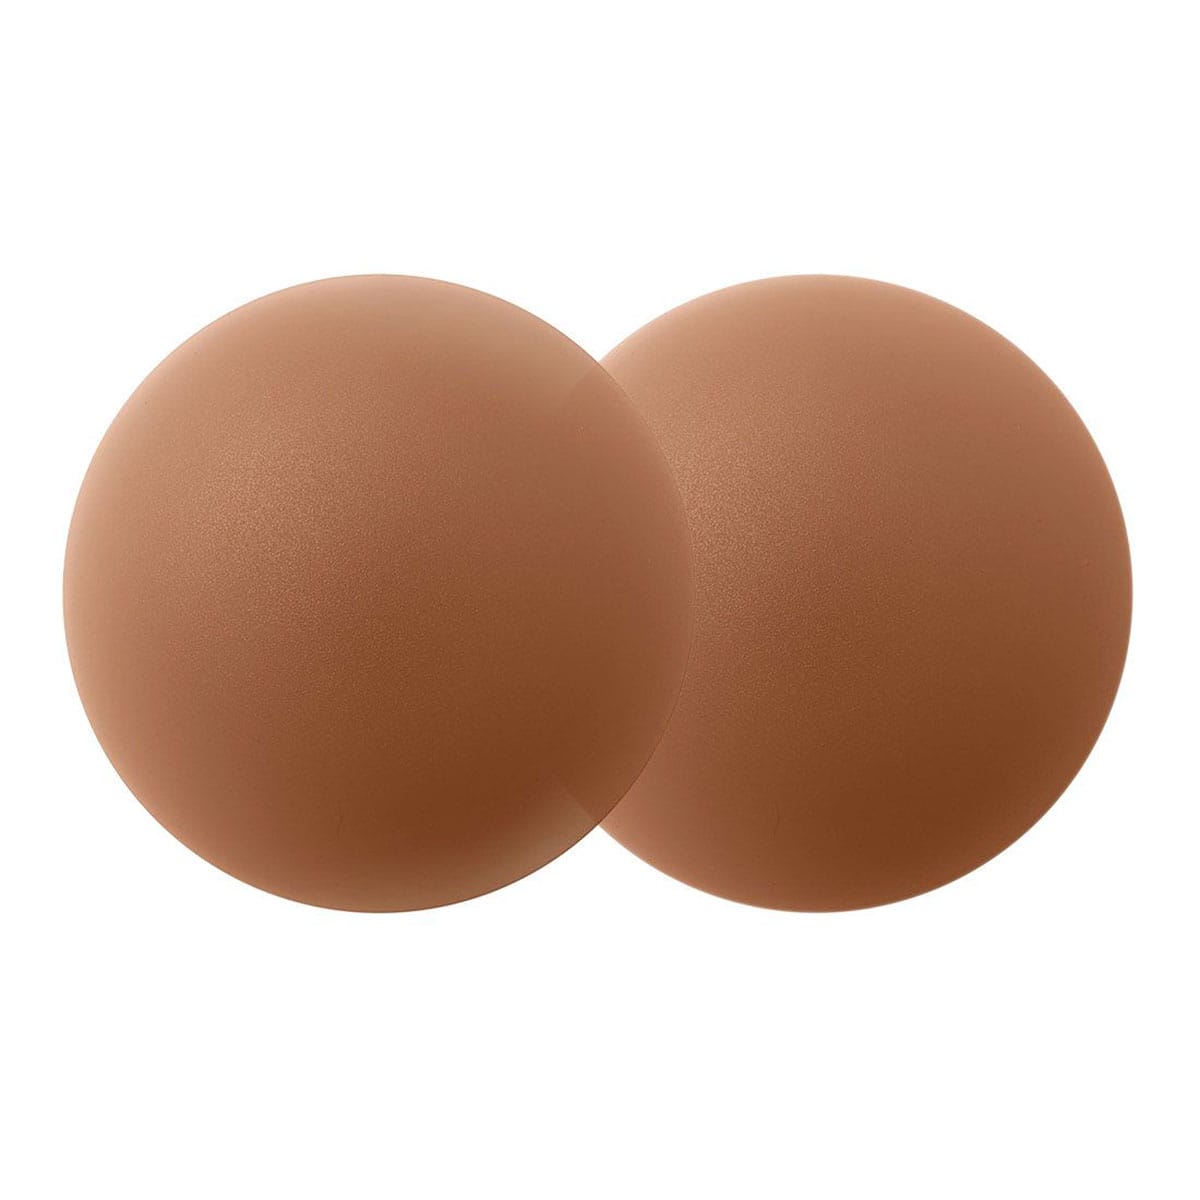 Wear Nippies Skin - Cocoa - Size 1 nipple covers.